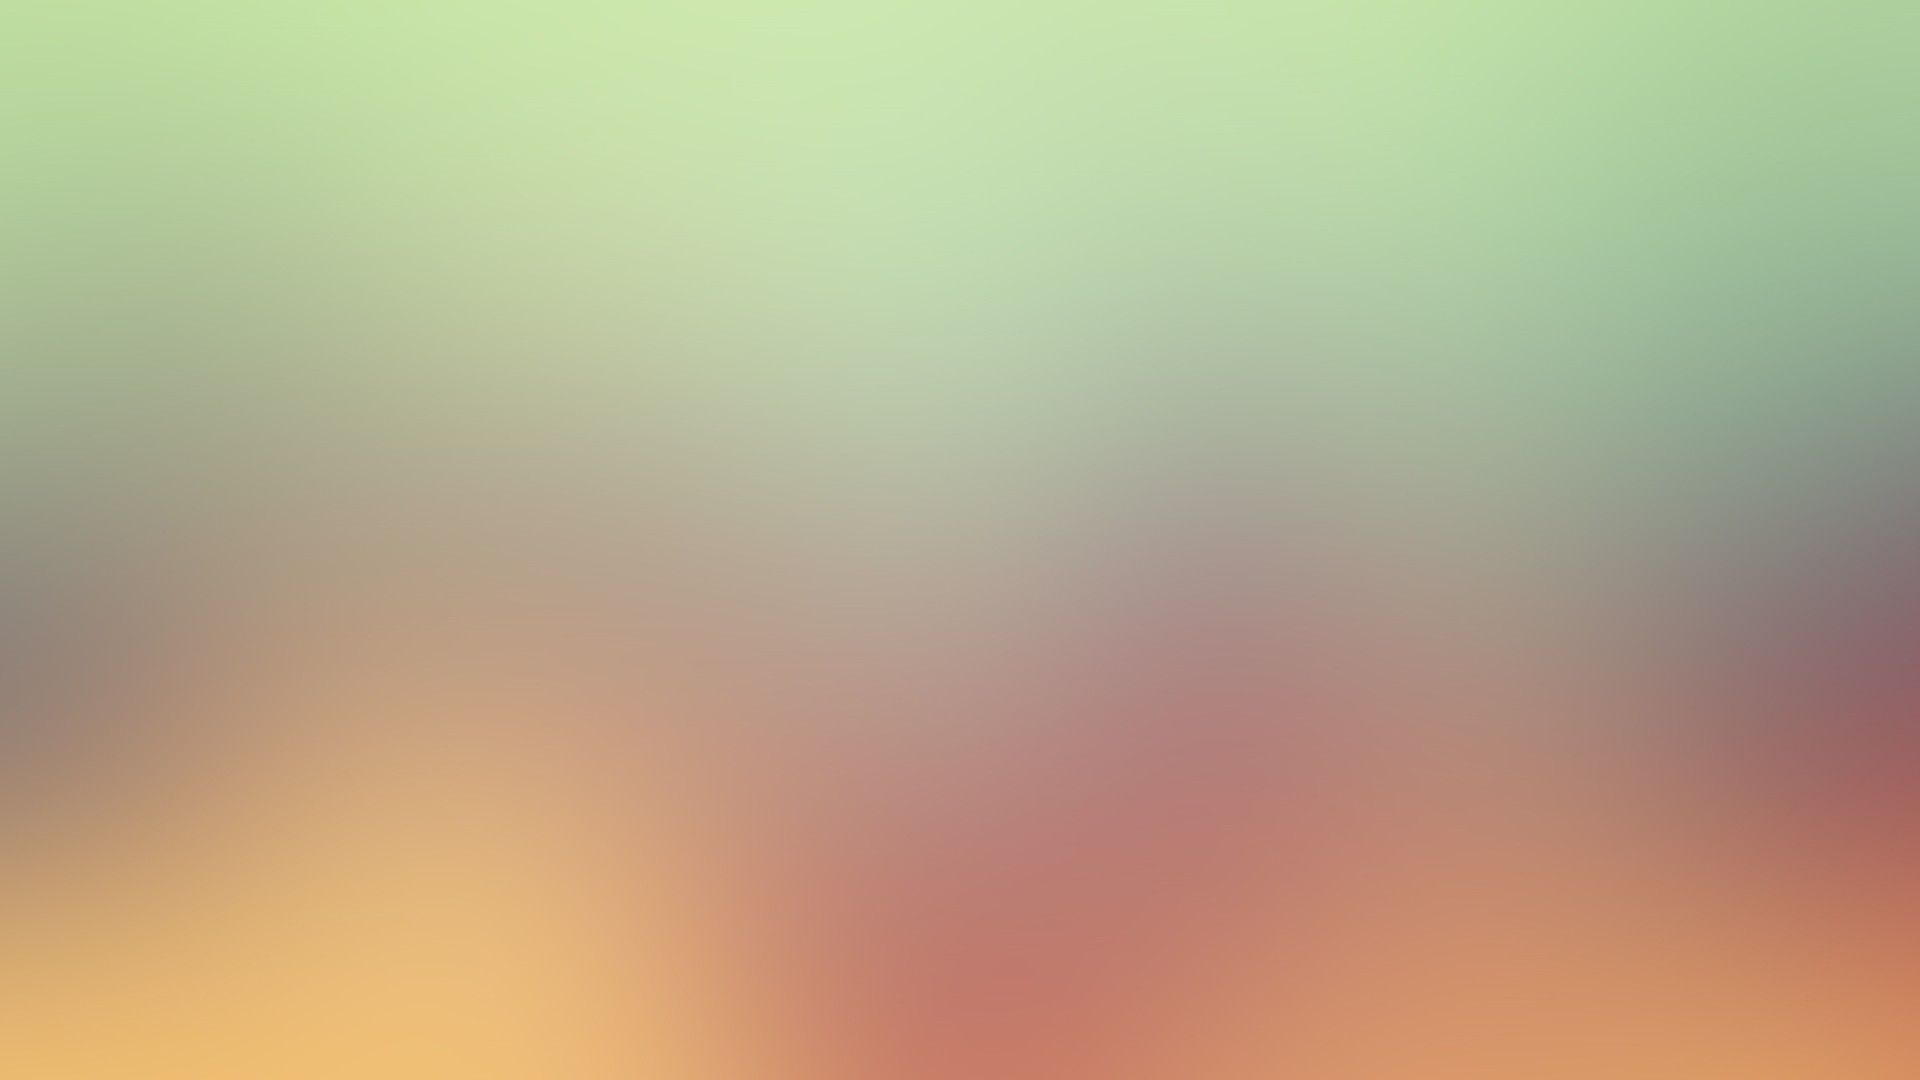 General 1920x1080 simple background gradient texture